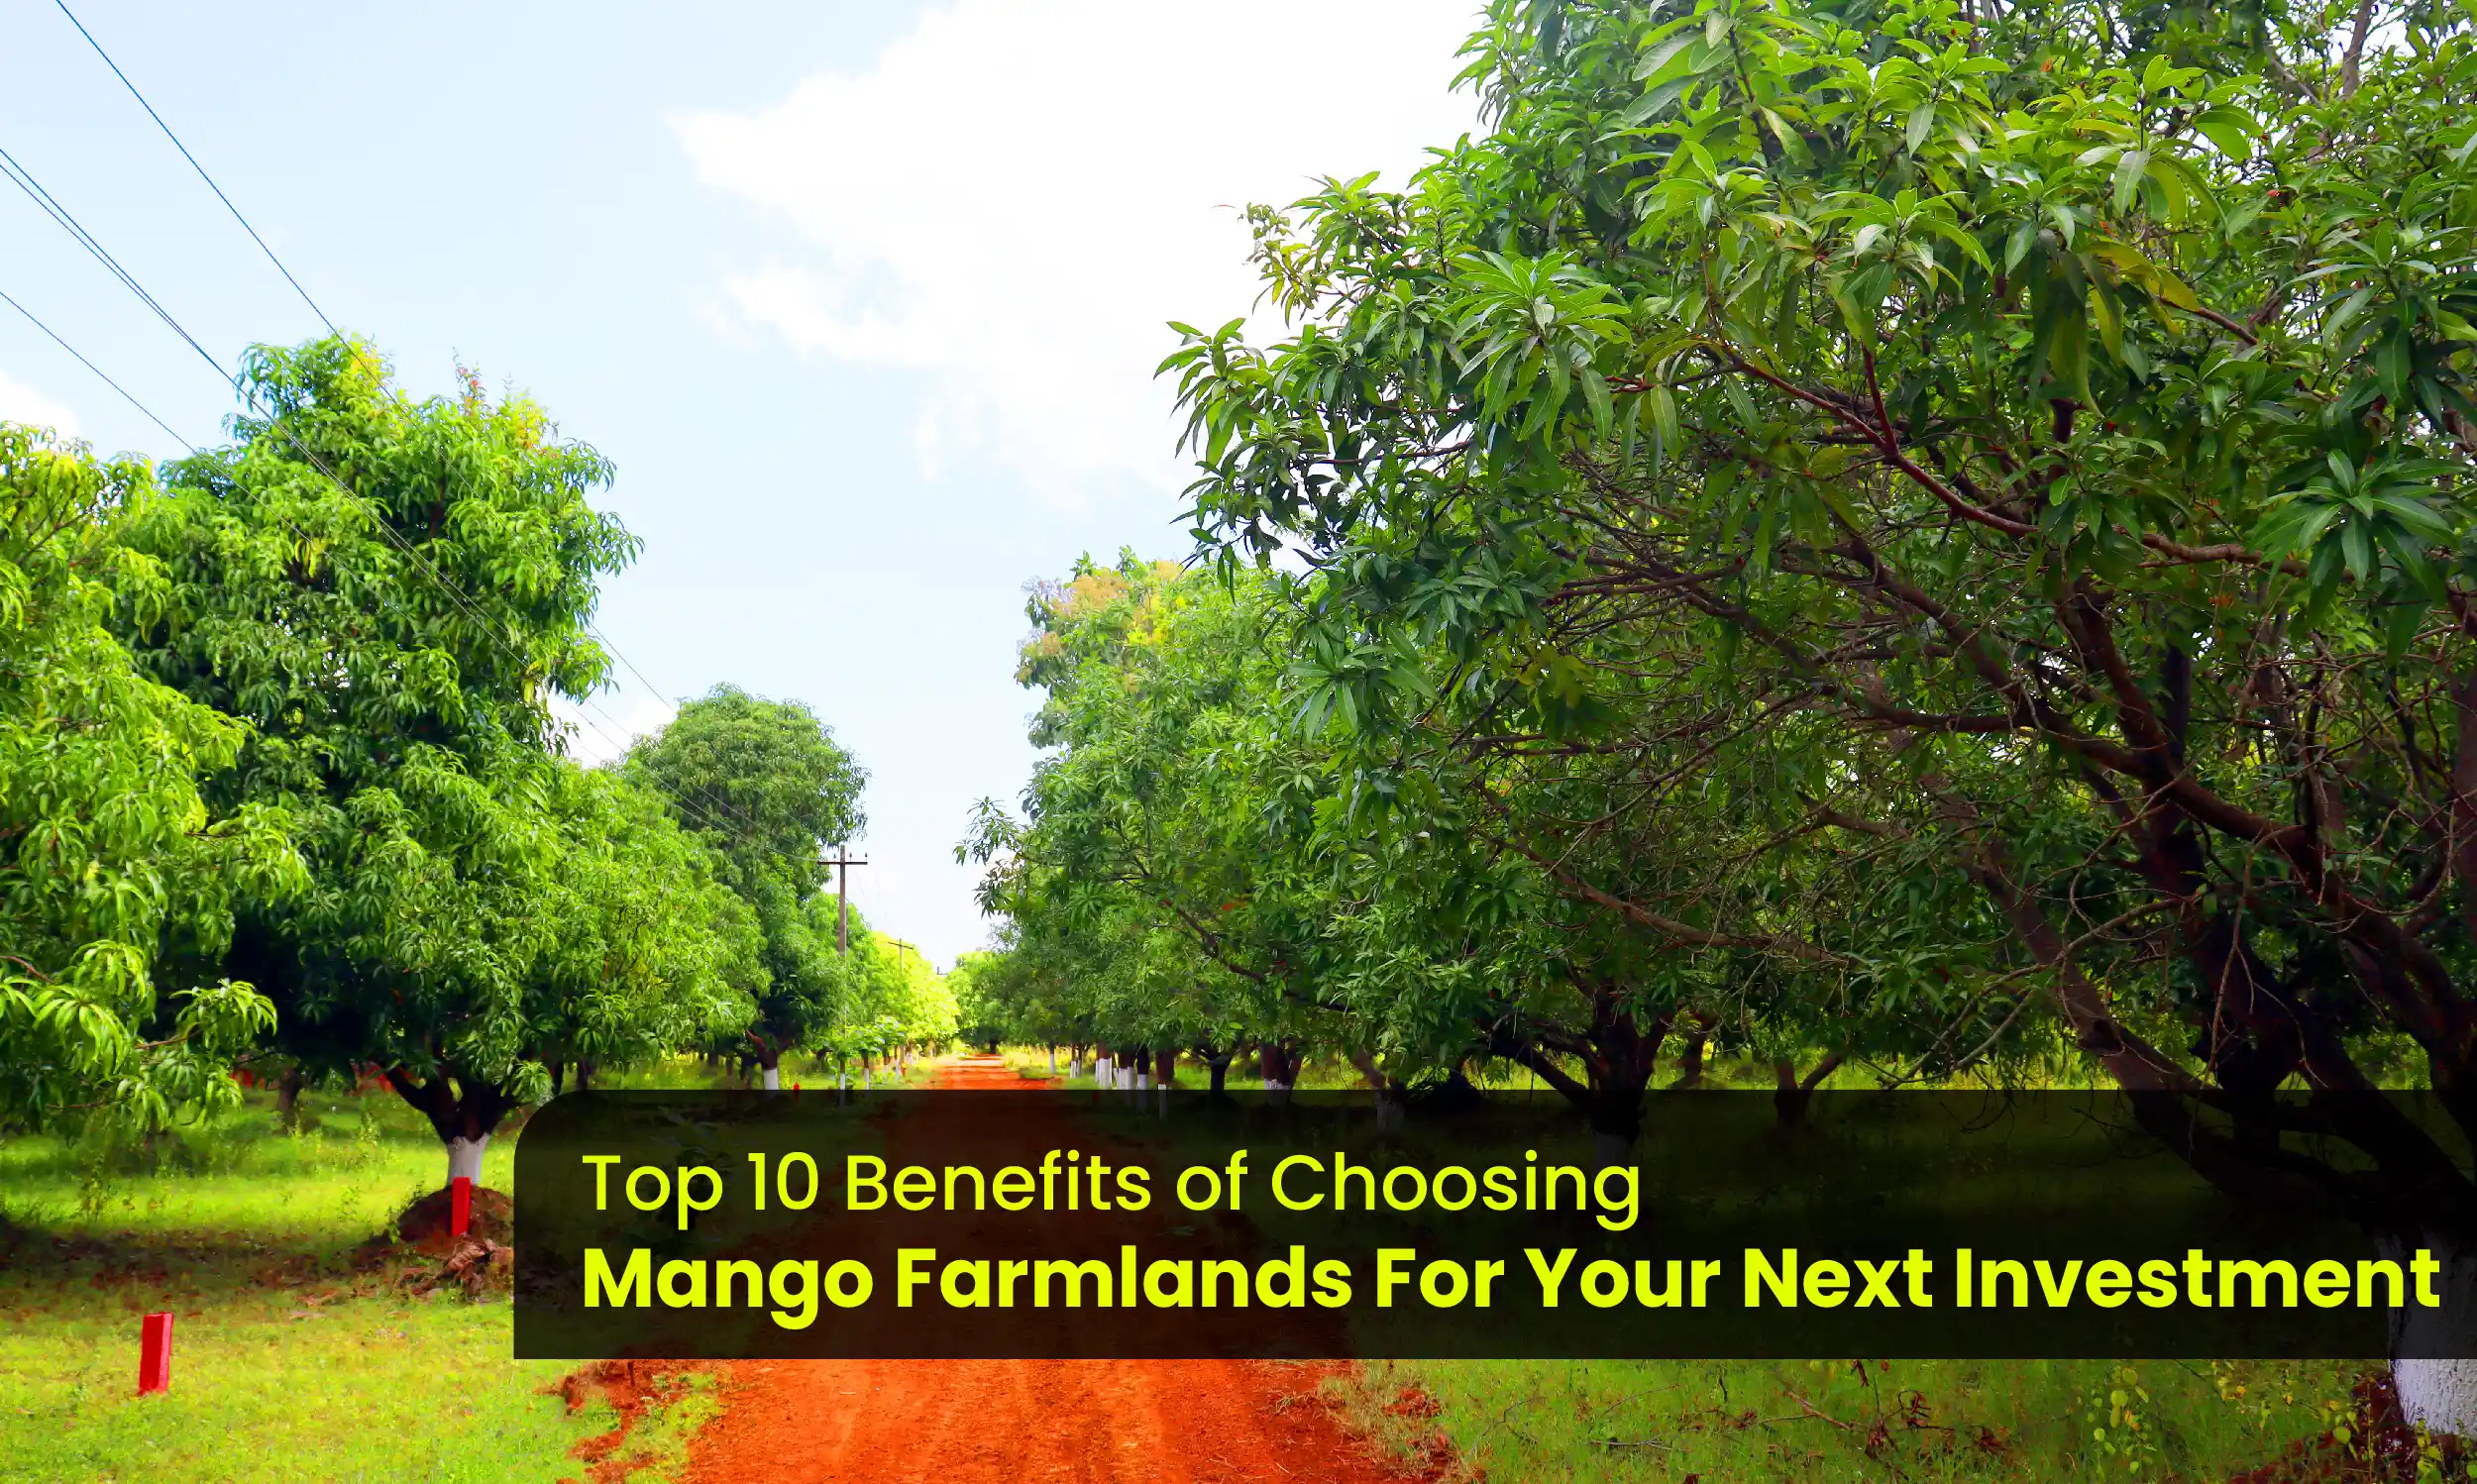 Top 10 Reasons Mango Farmlands Are a Smart Choice